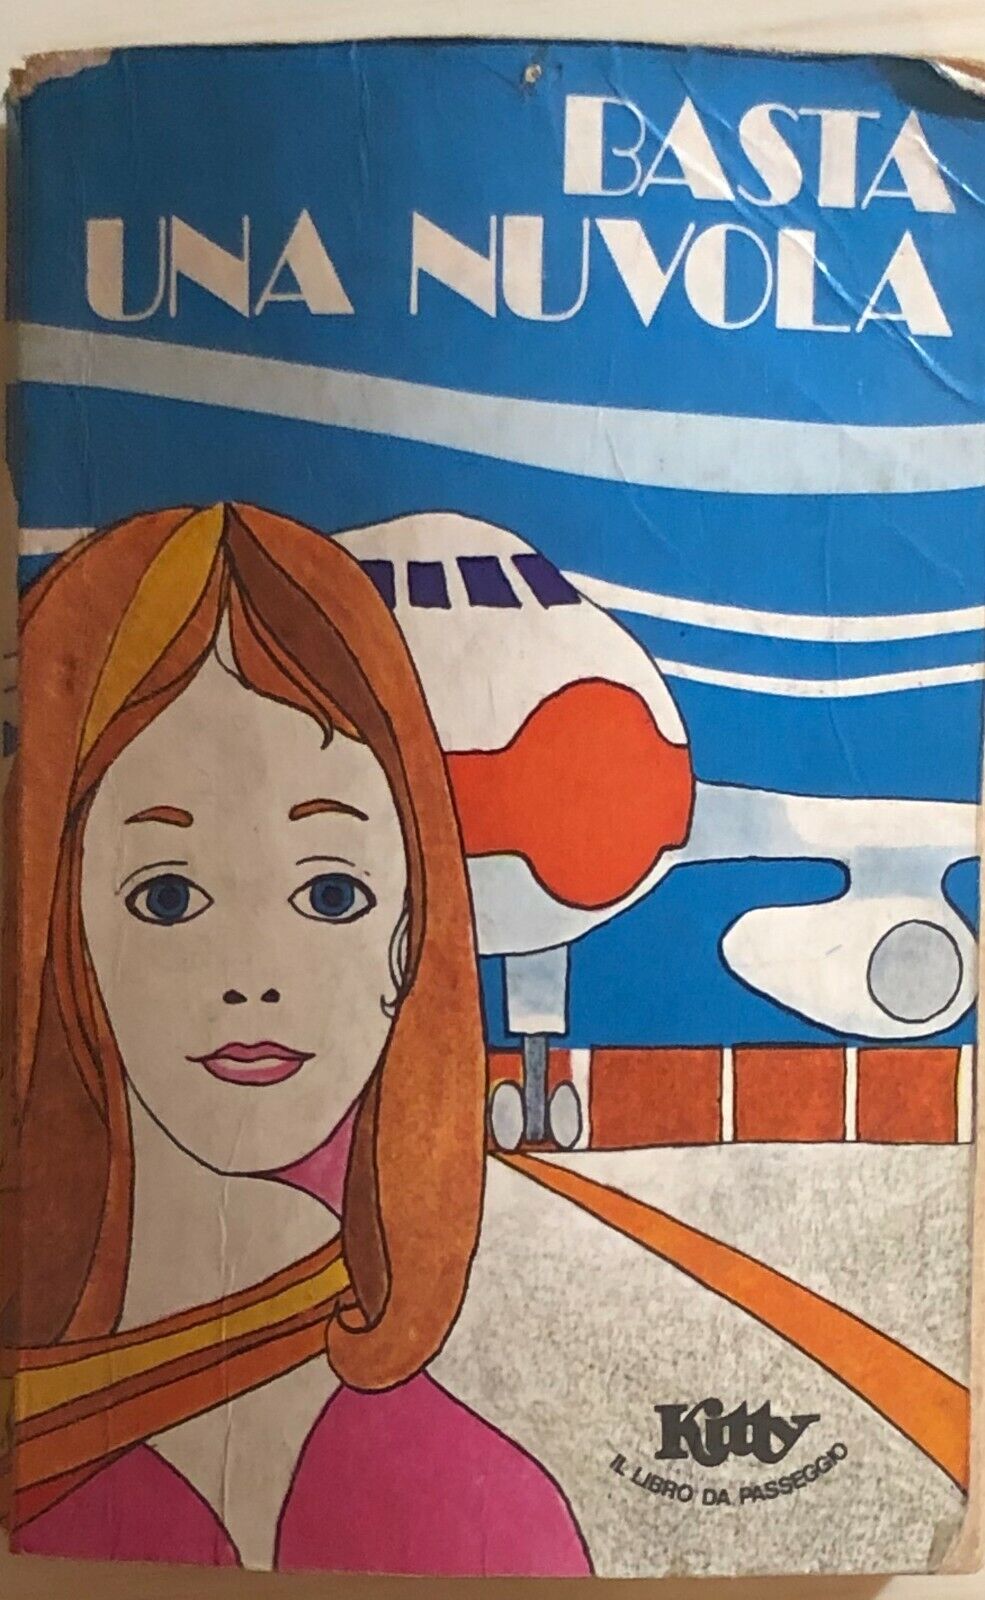 Basta una nuvola di Didier Decoin, 1973, Arnoldo Mondadori Editore